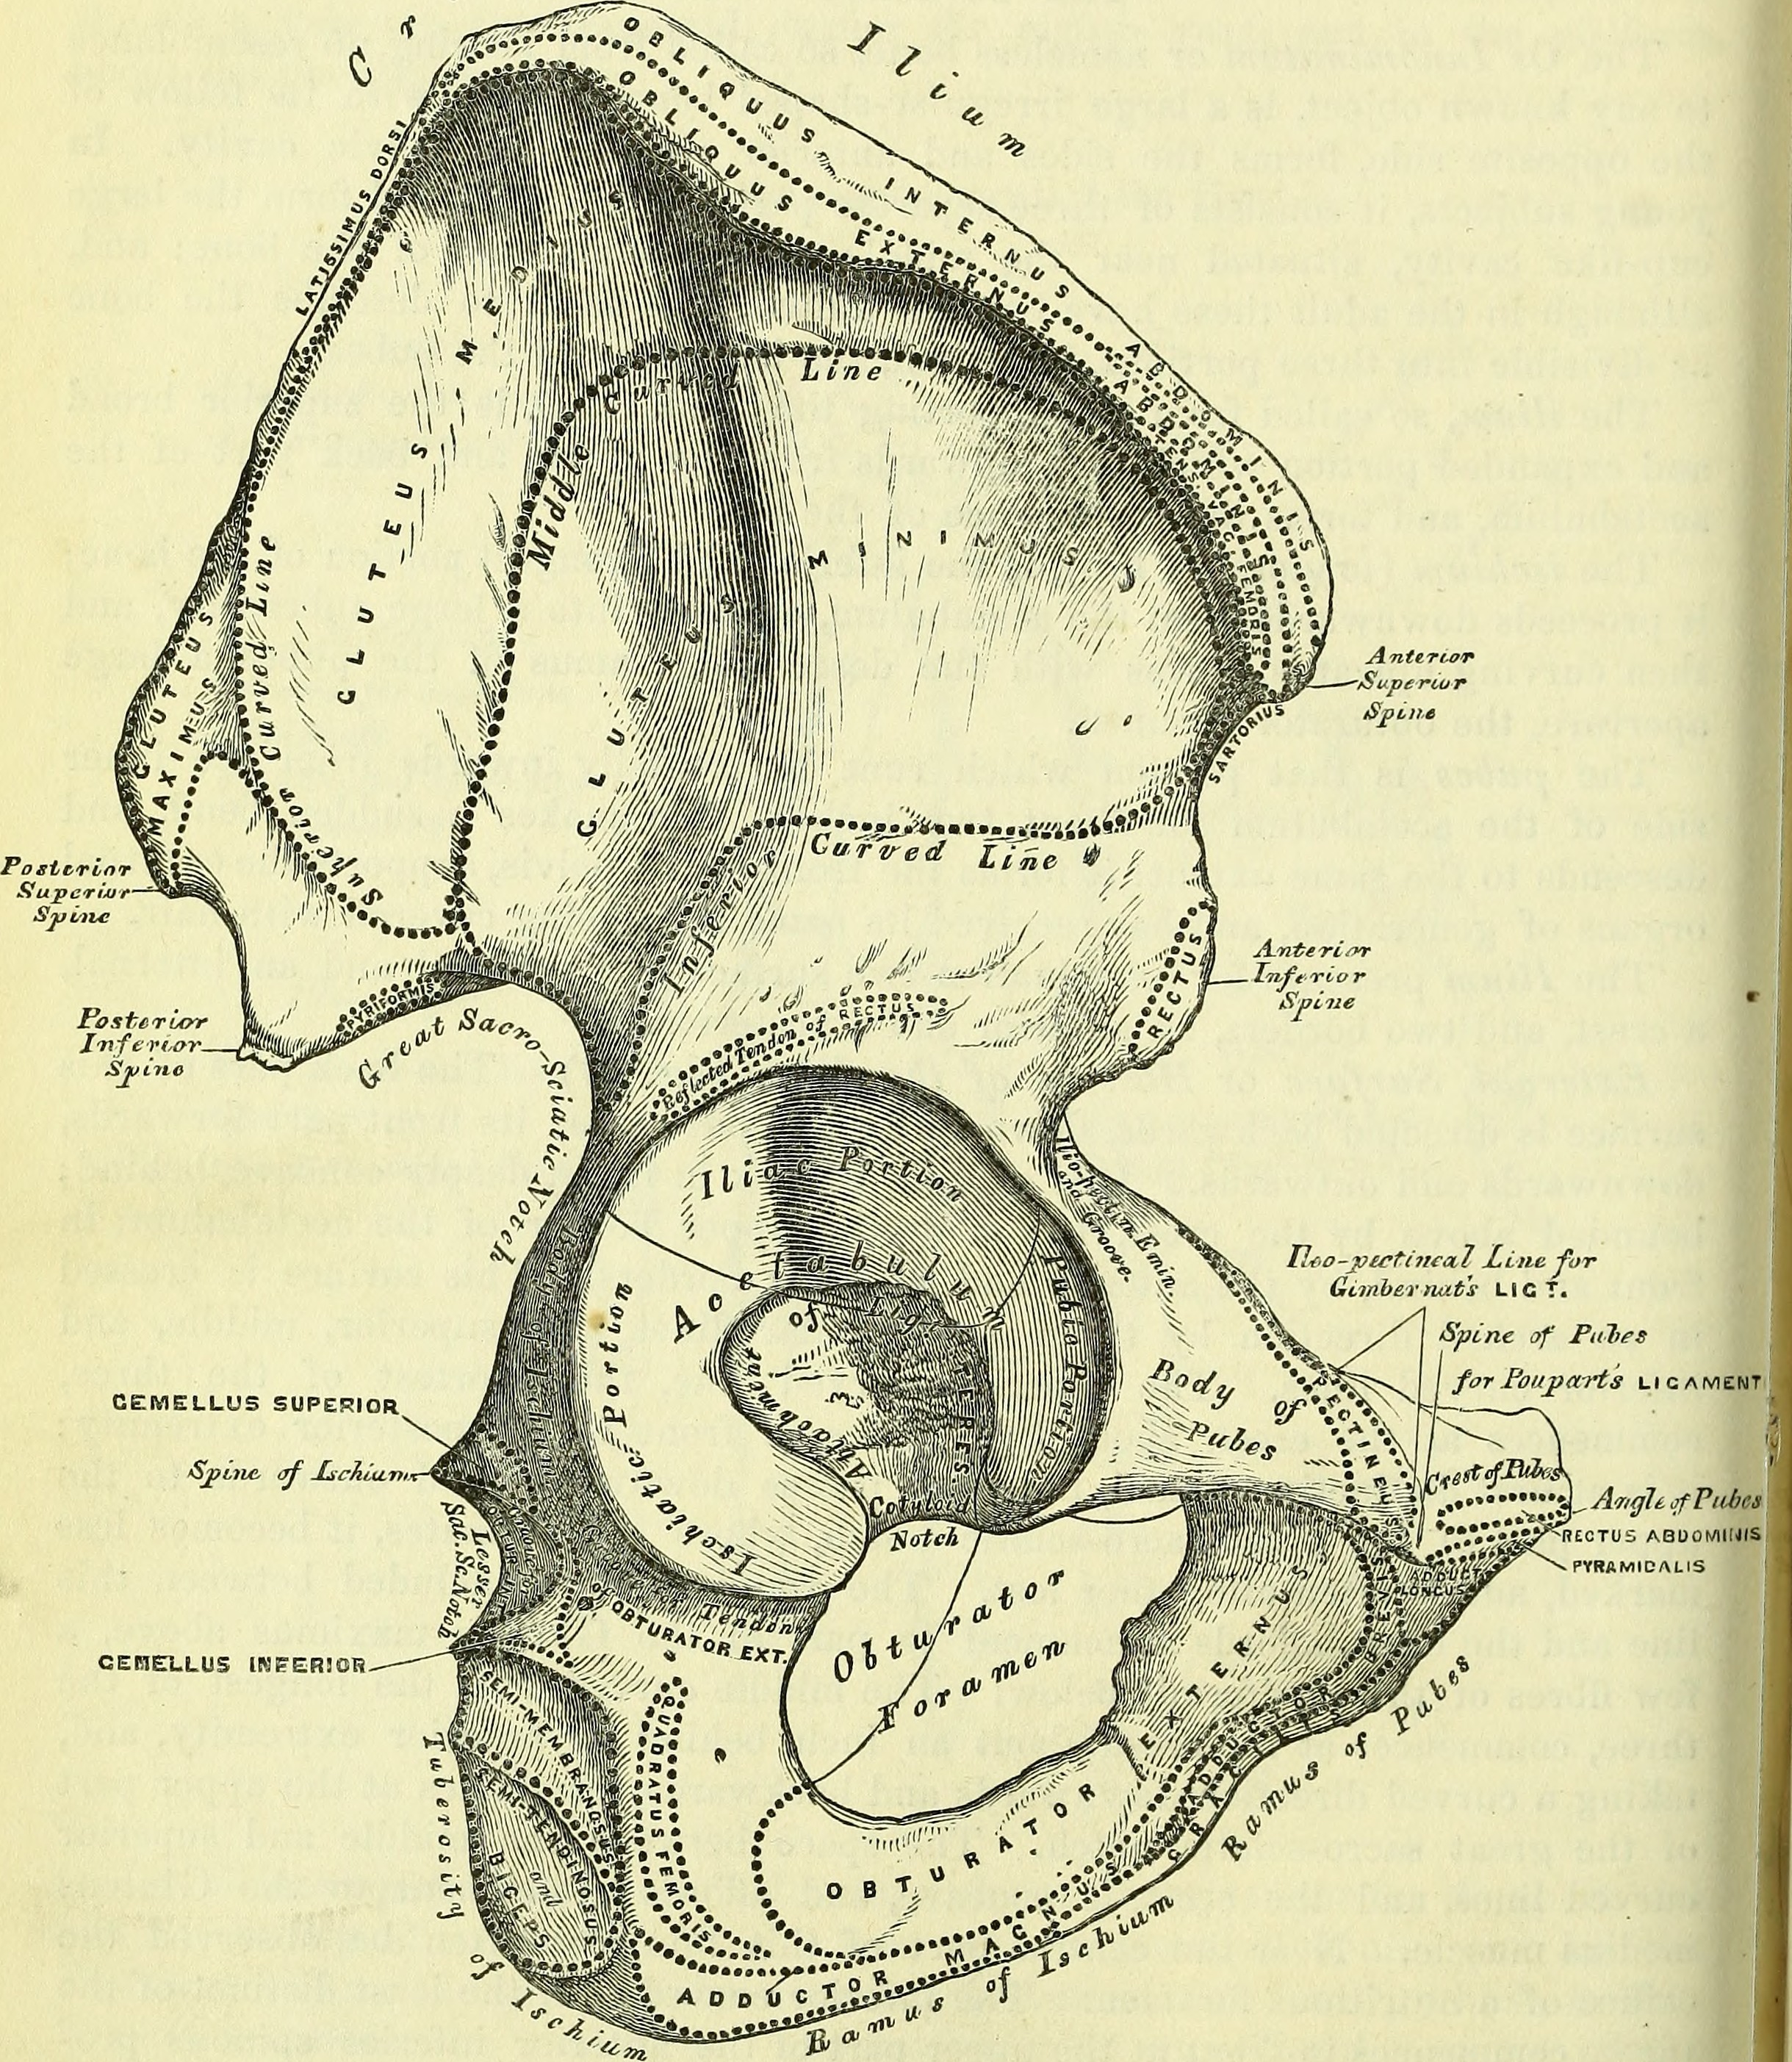 Rectus abdominis muscle - Wikipedia